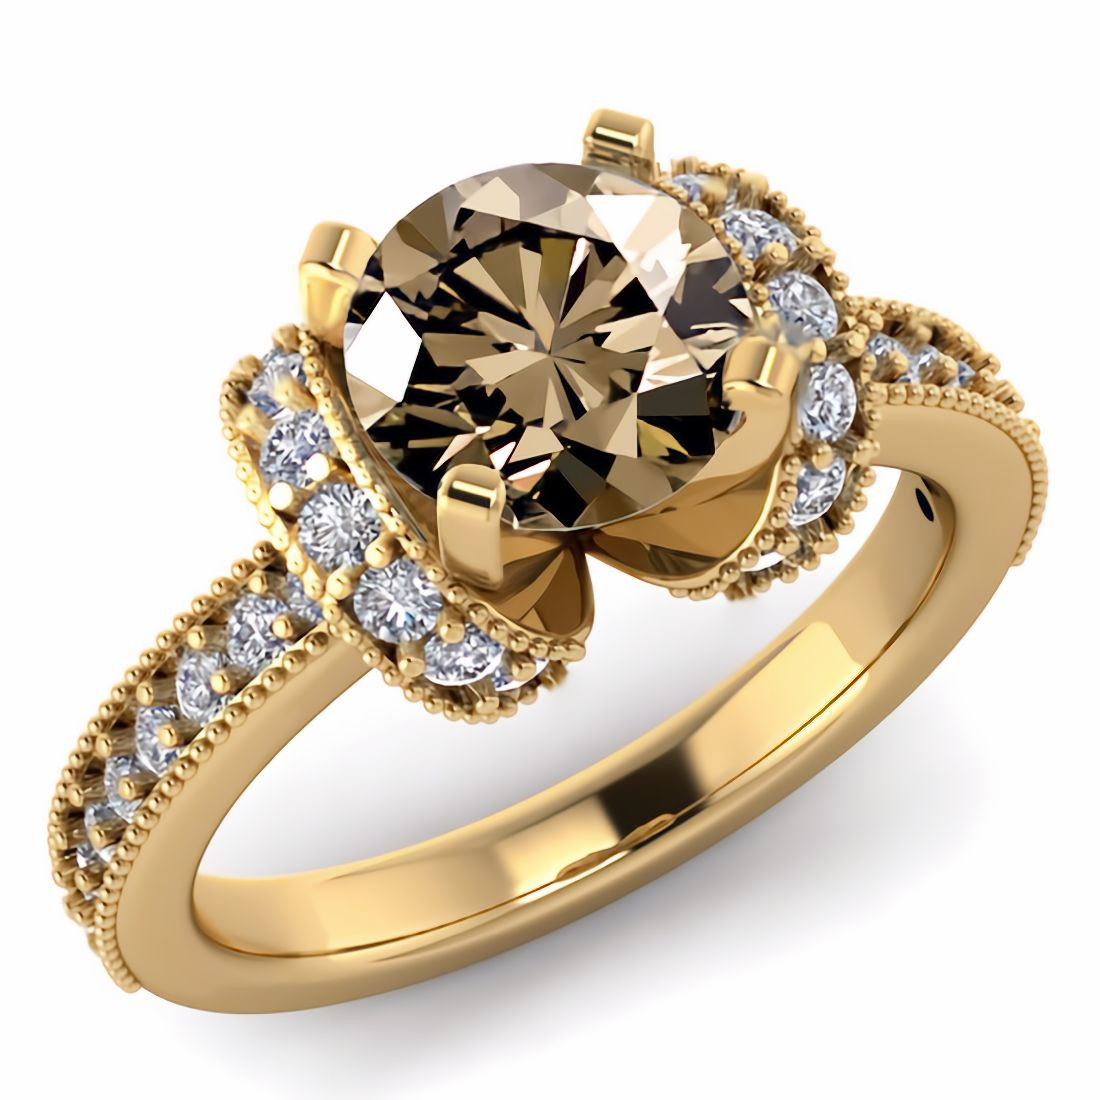 Fancy-Brown Diamond Engagement Ring 14k Yellow Gold